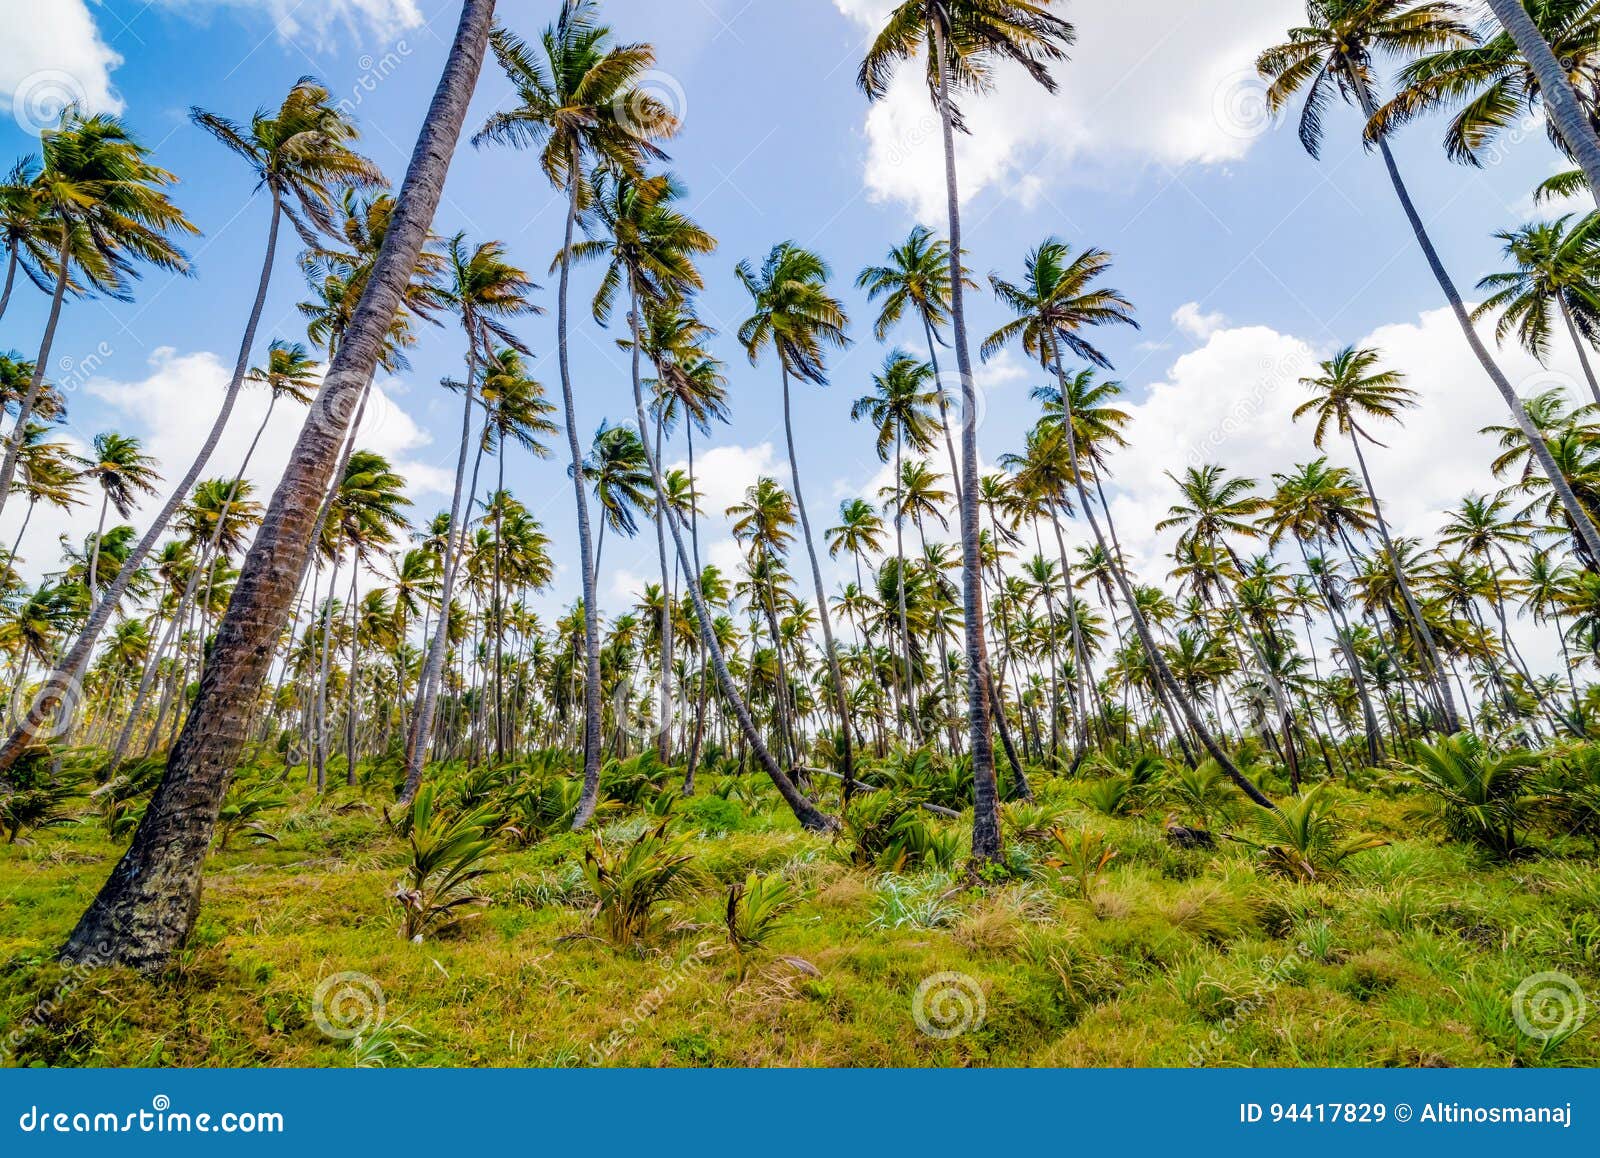 coconut tree forest plantation field farm mayaro manzanilla trinidad and tobago